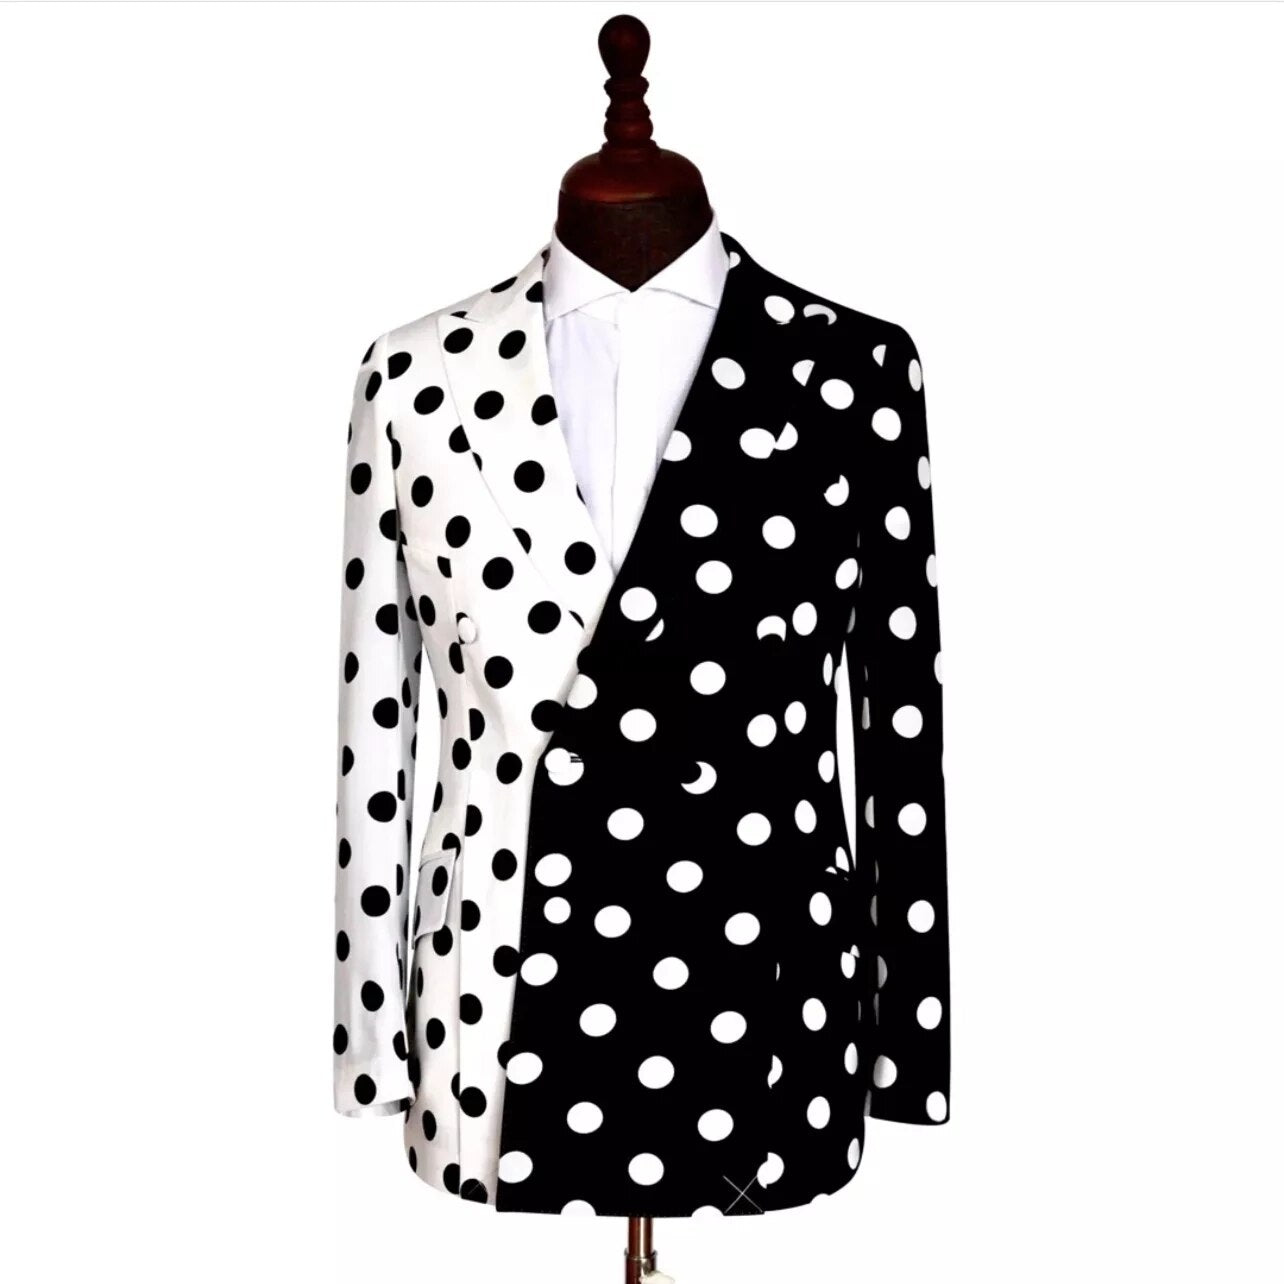 Custom Made Black Ivory Color Matching Big Polka Dot Men's Suits Wear Coat Wedding Groom Peaked Lapel Slim Blazer 1 Piece Jacket